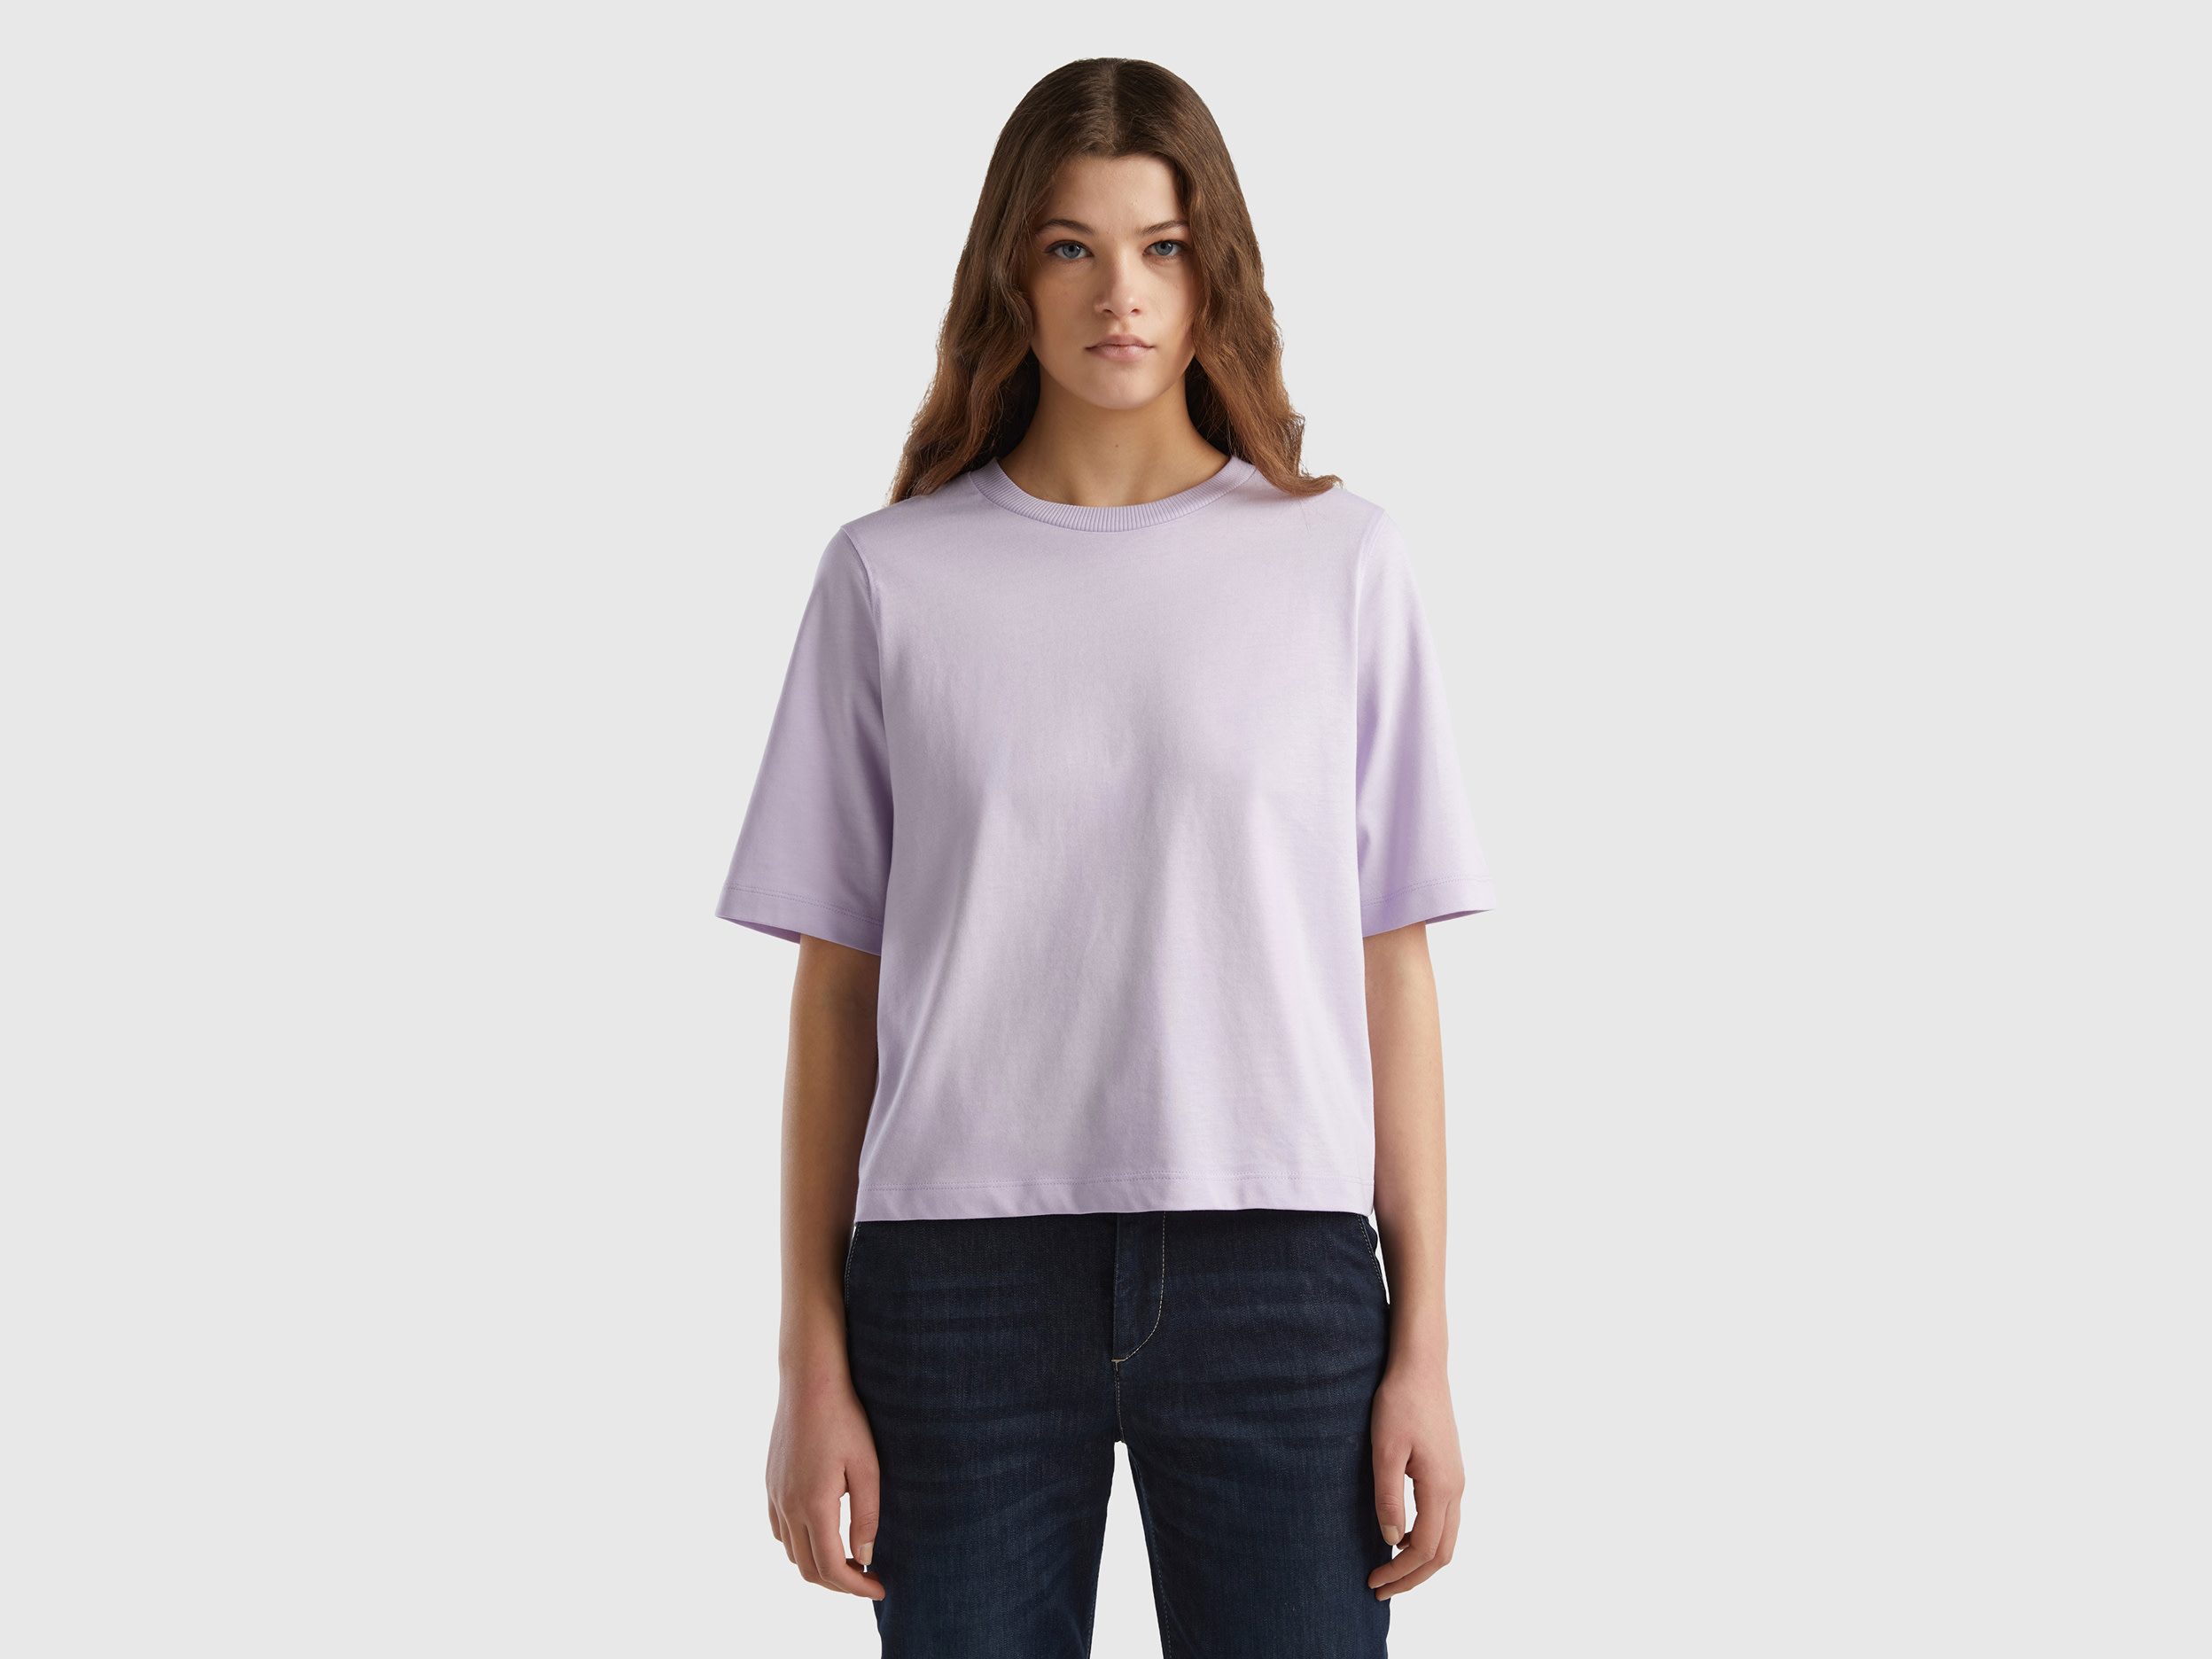 Benetton, 100% Cotton Boxy Fit T-shirt, size XS, Lilac, Women